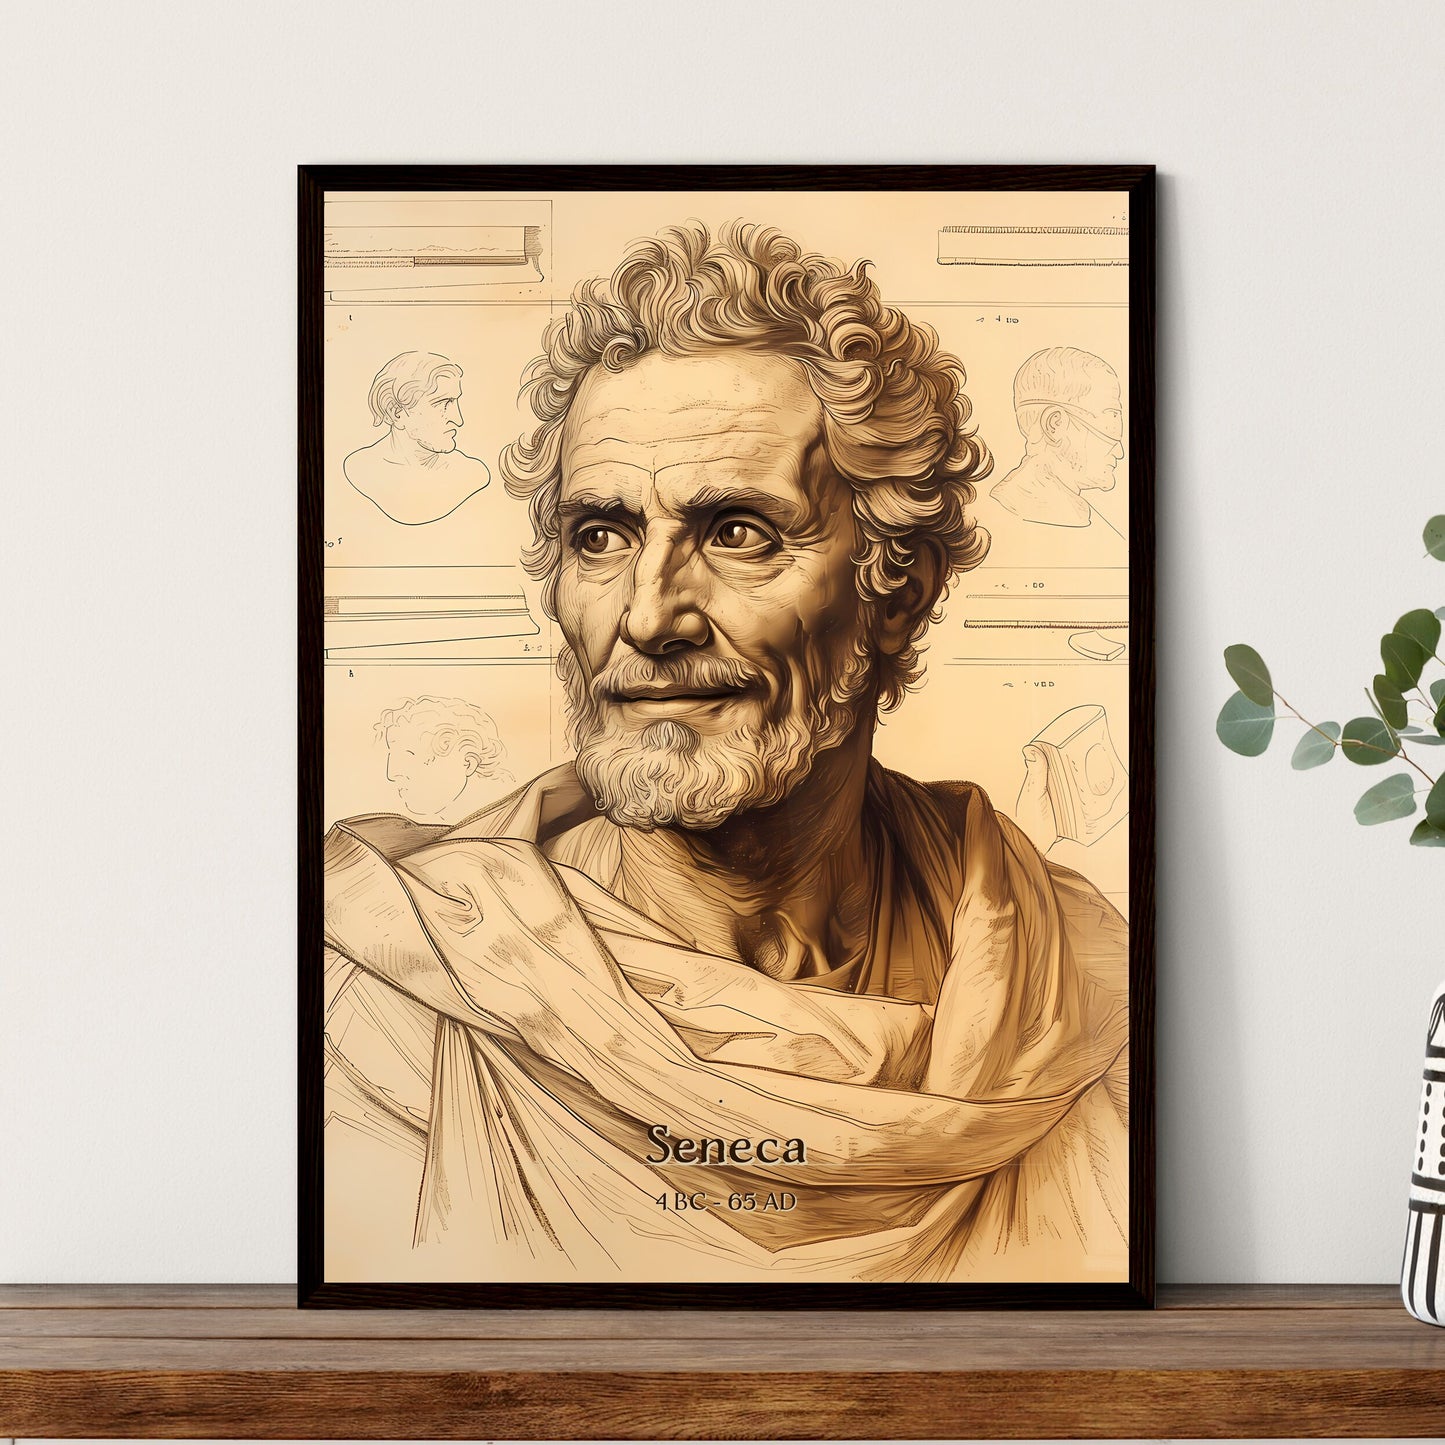 Seneca, 4 BC - 65 AD, A Poster of a drawing of a man Default Title